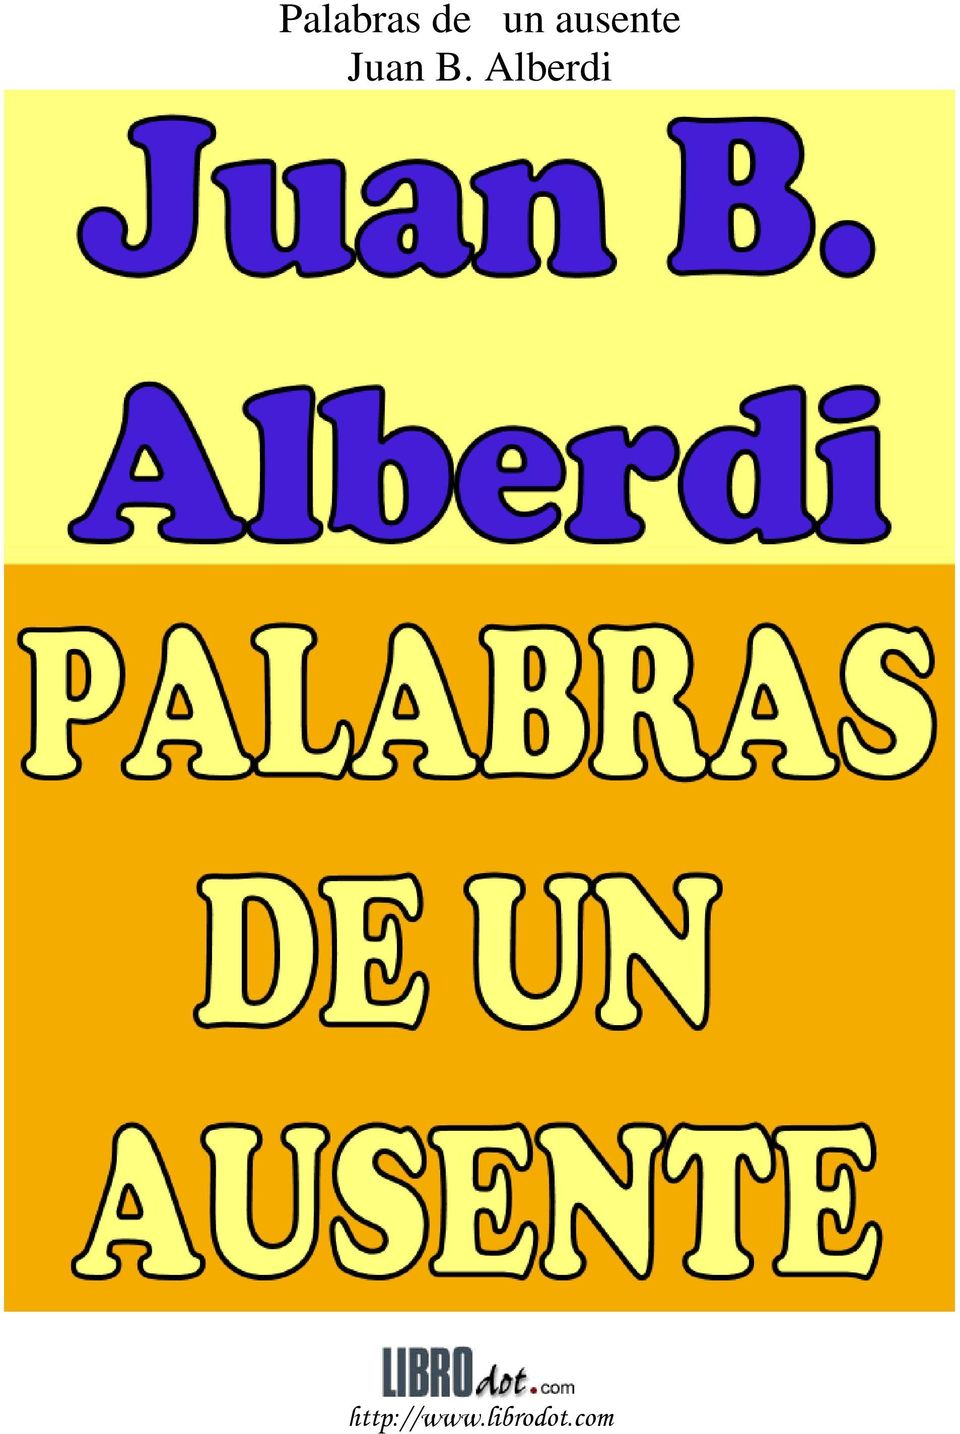 Alberdi